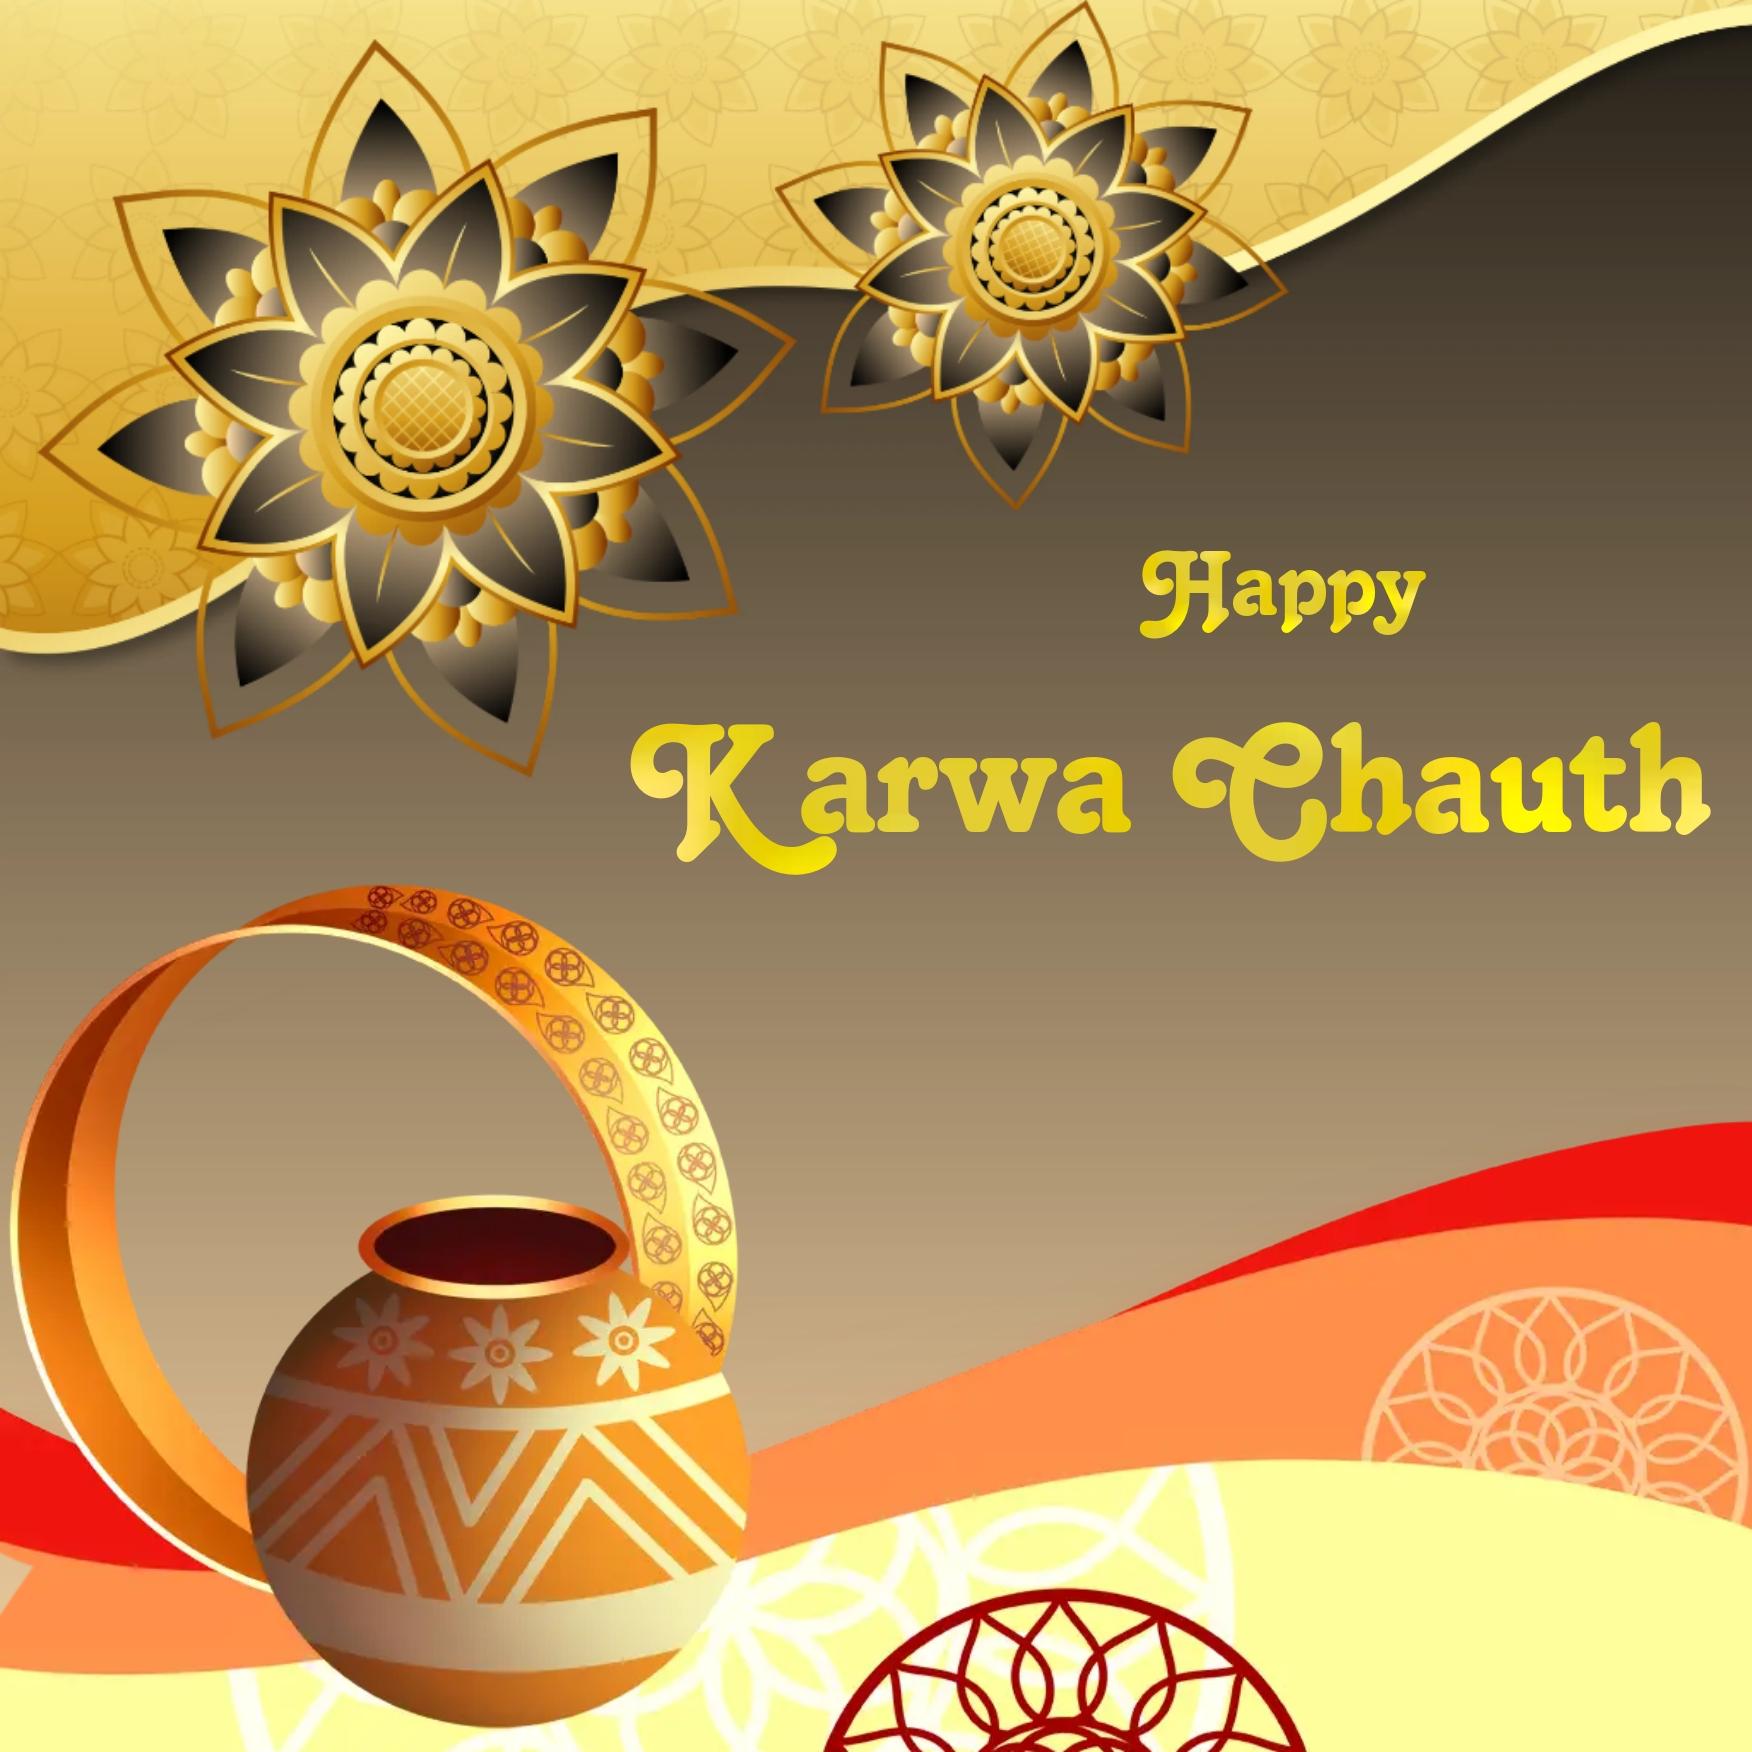 Happy Karwa Chauth Greetings Images